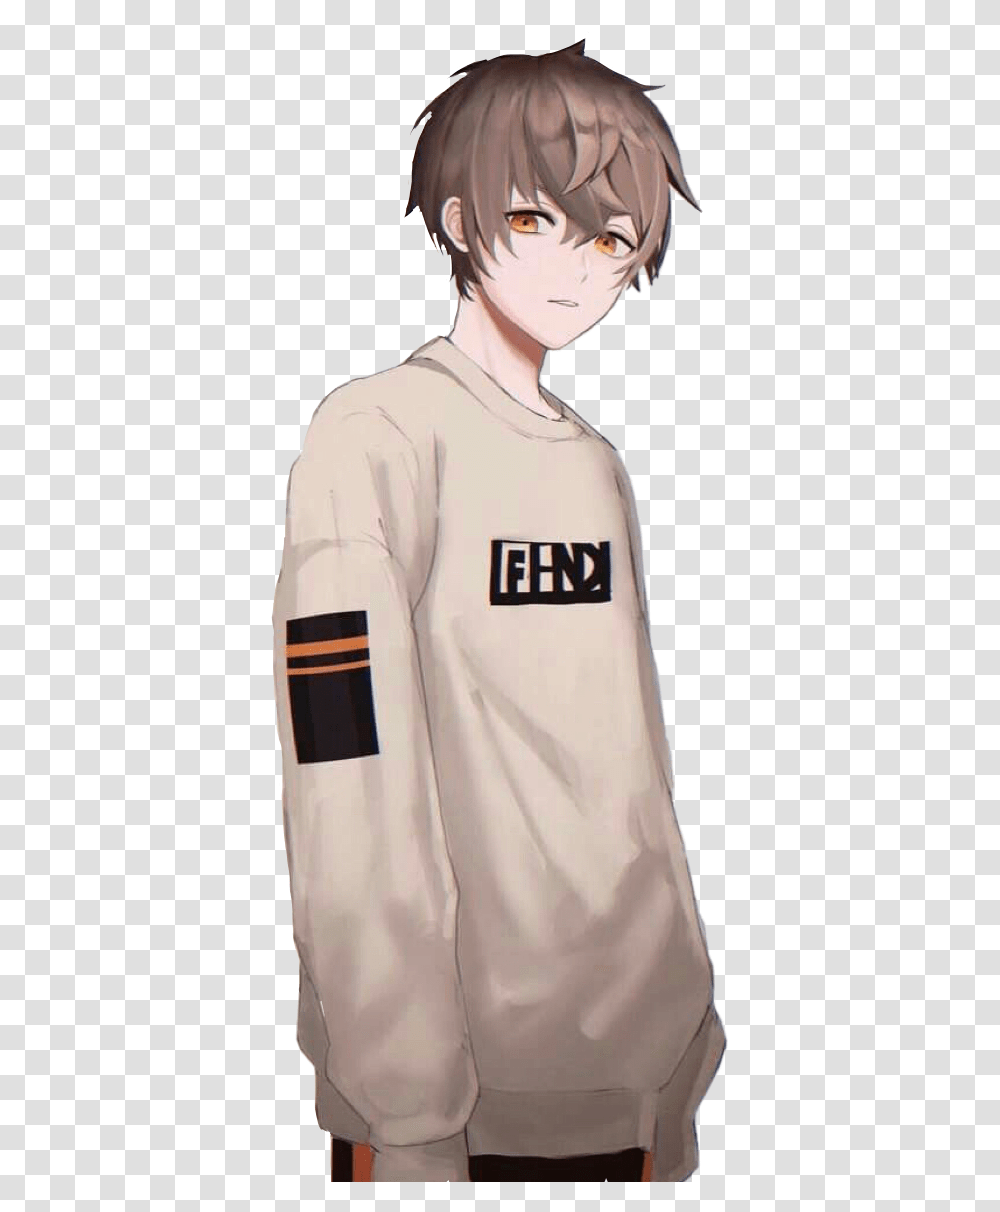 Cute Anime Boy Aesthetic Cute Anime Boy, Clothing, Apparel, Shirt, Jersey Transparent Png